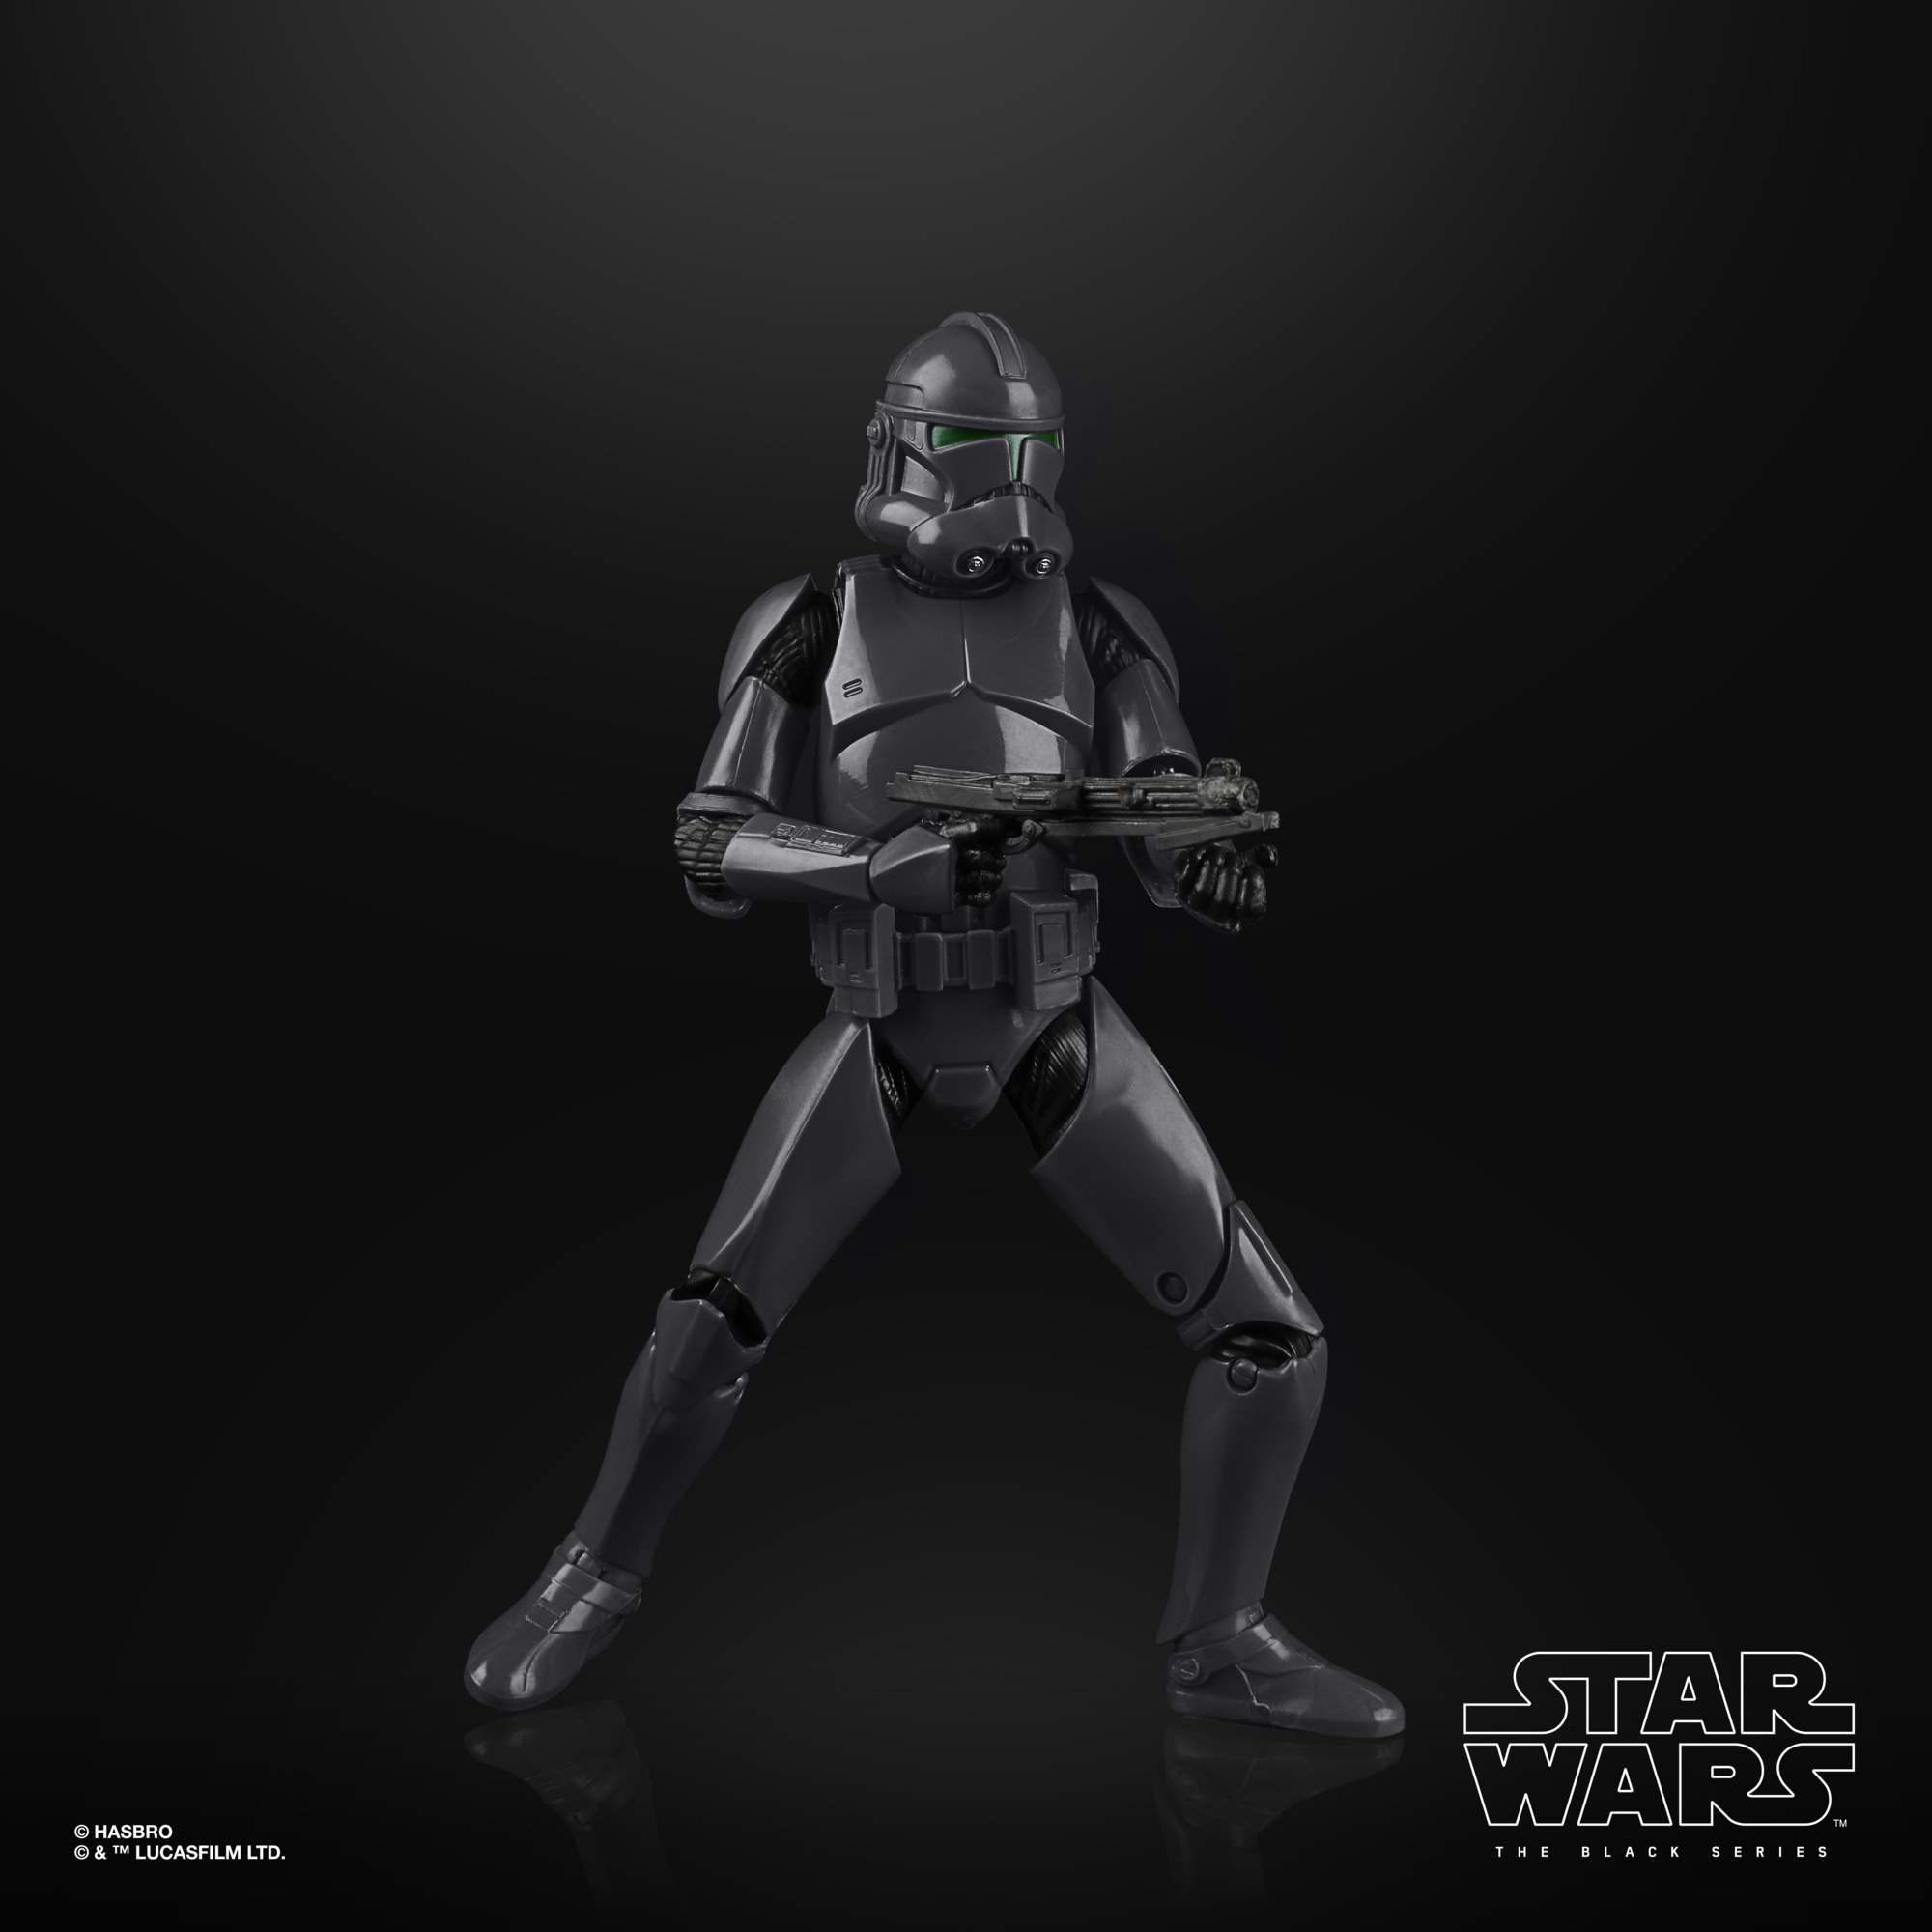 Star Wars The Black Series Bad Batch Elite Squad Trooper 15cm Actionfigur F2960 5010993836932